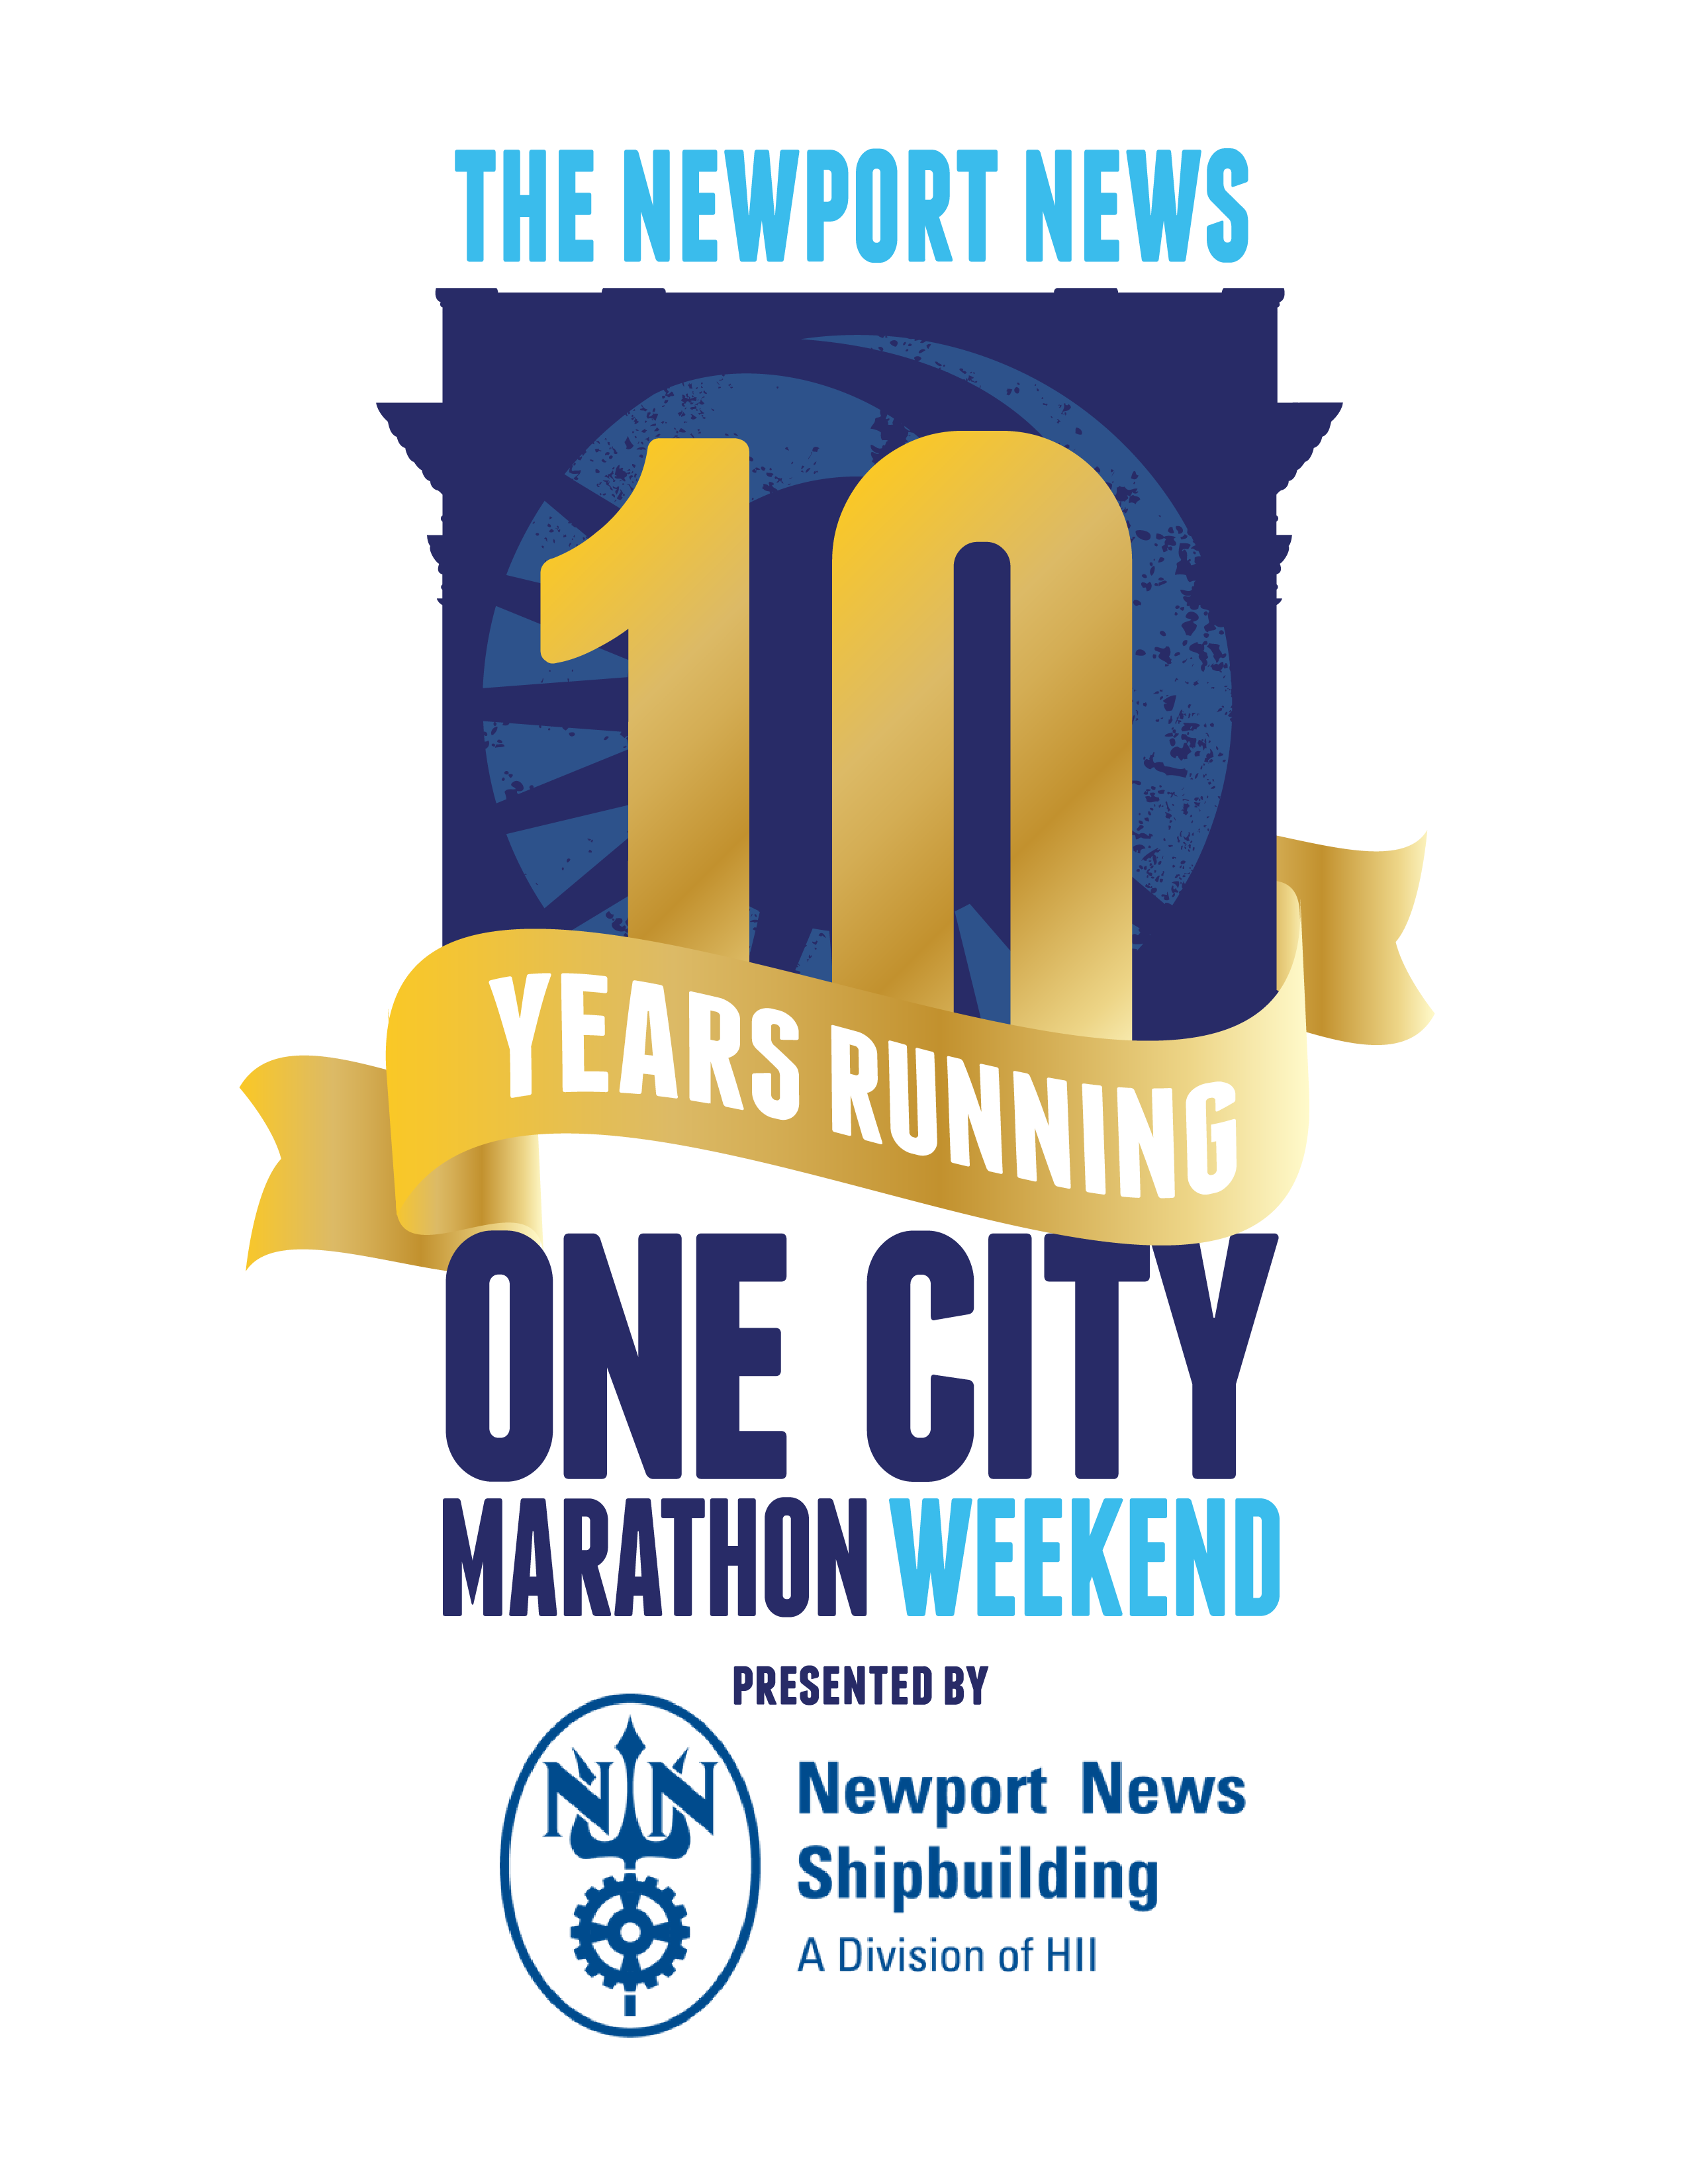 One City Marathon Weekend - Newport News Parks & Recreation